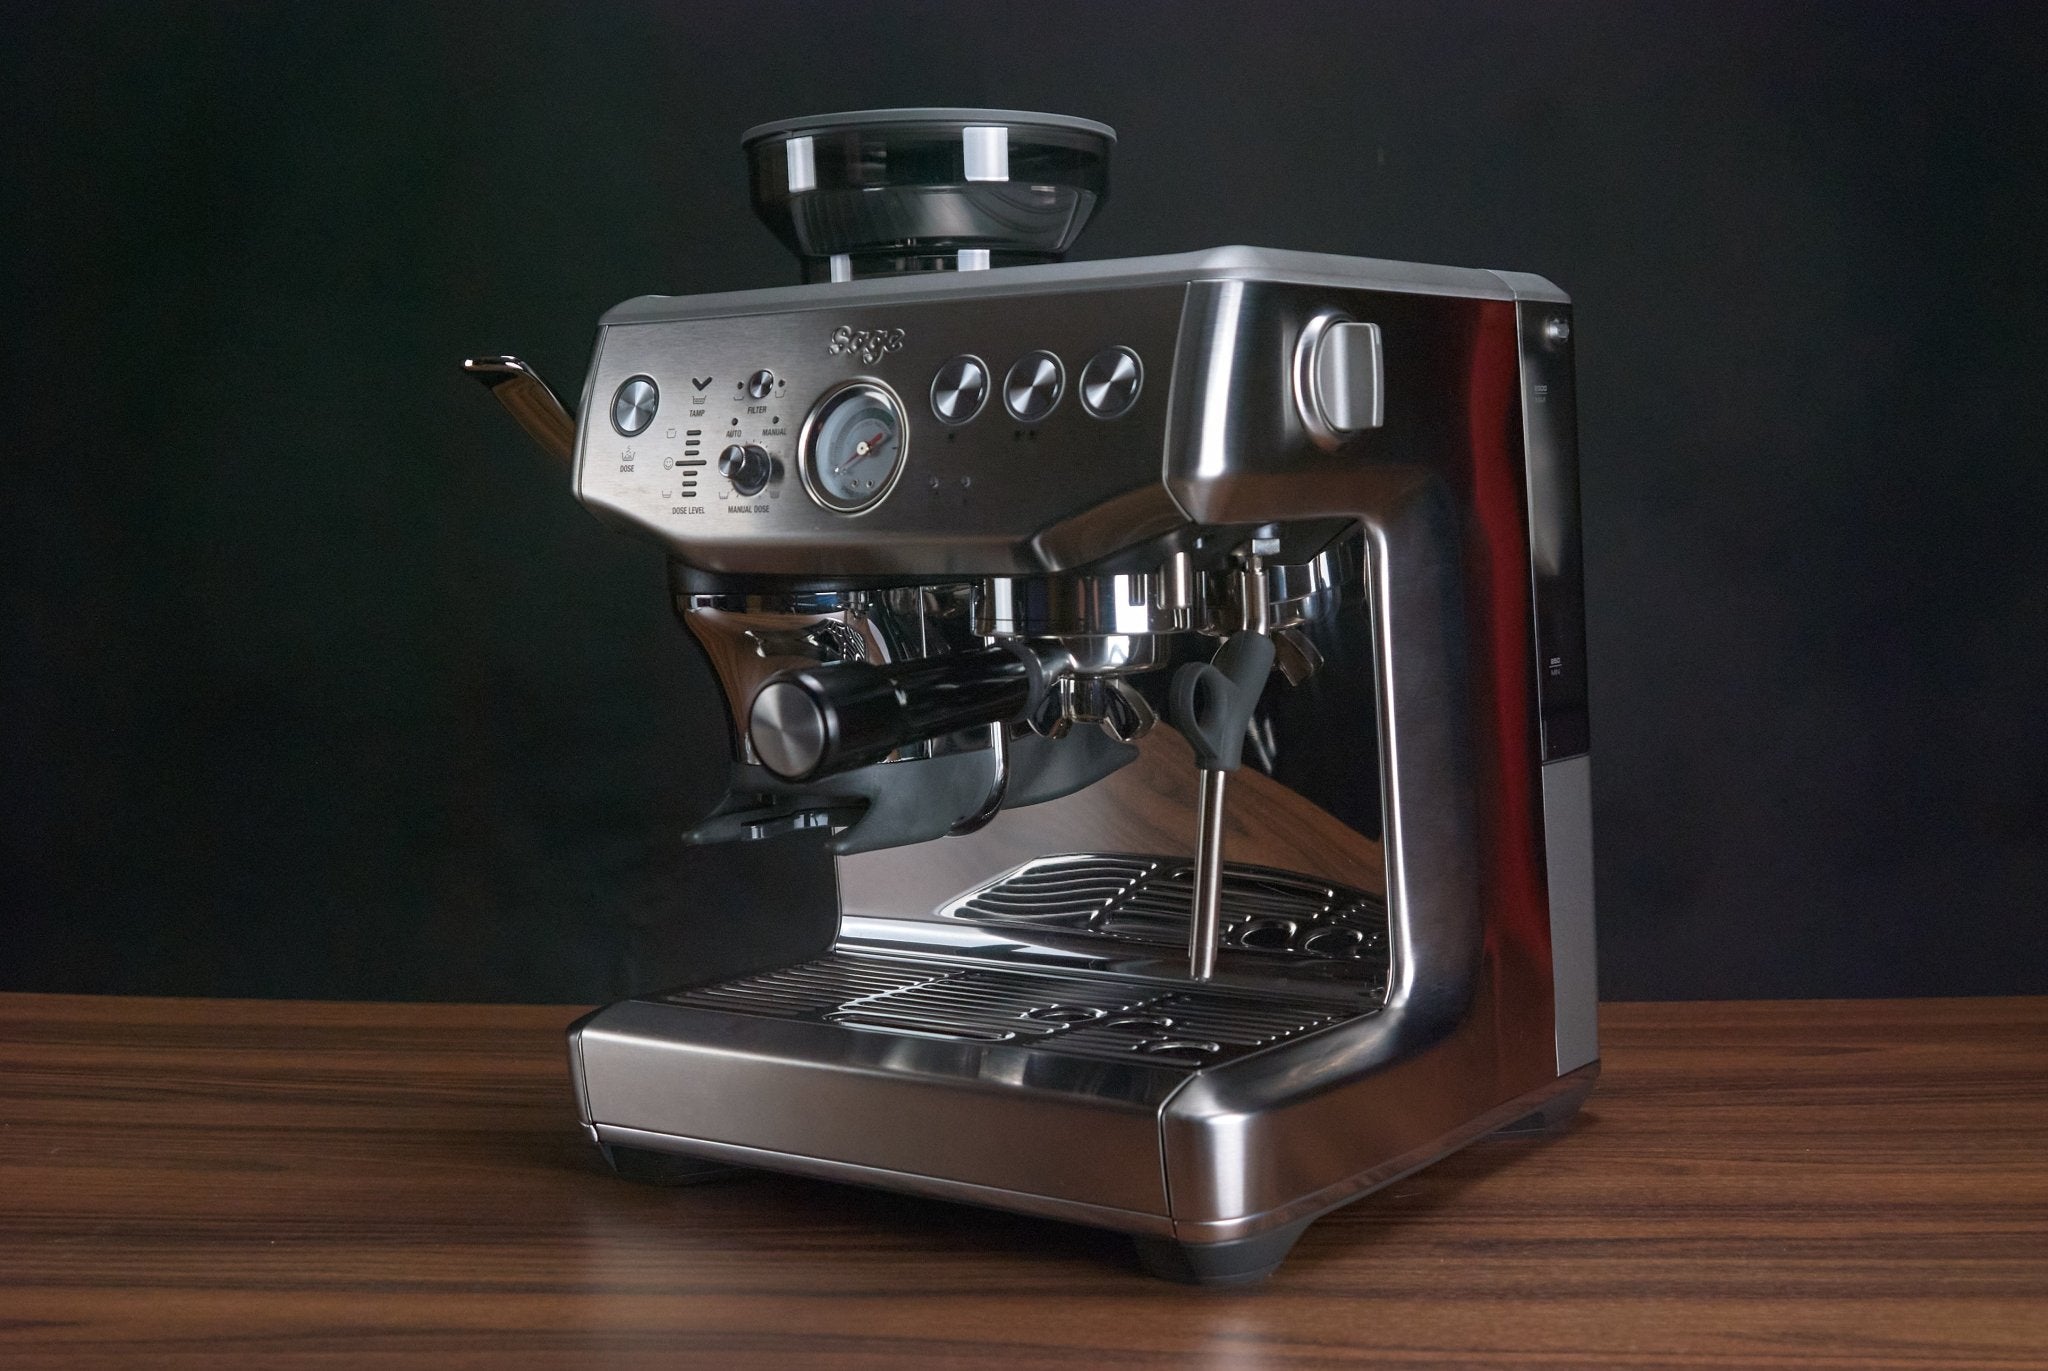 Sage Barista Express Impress - The ultimate coffee machine